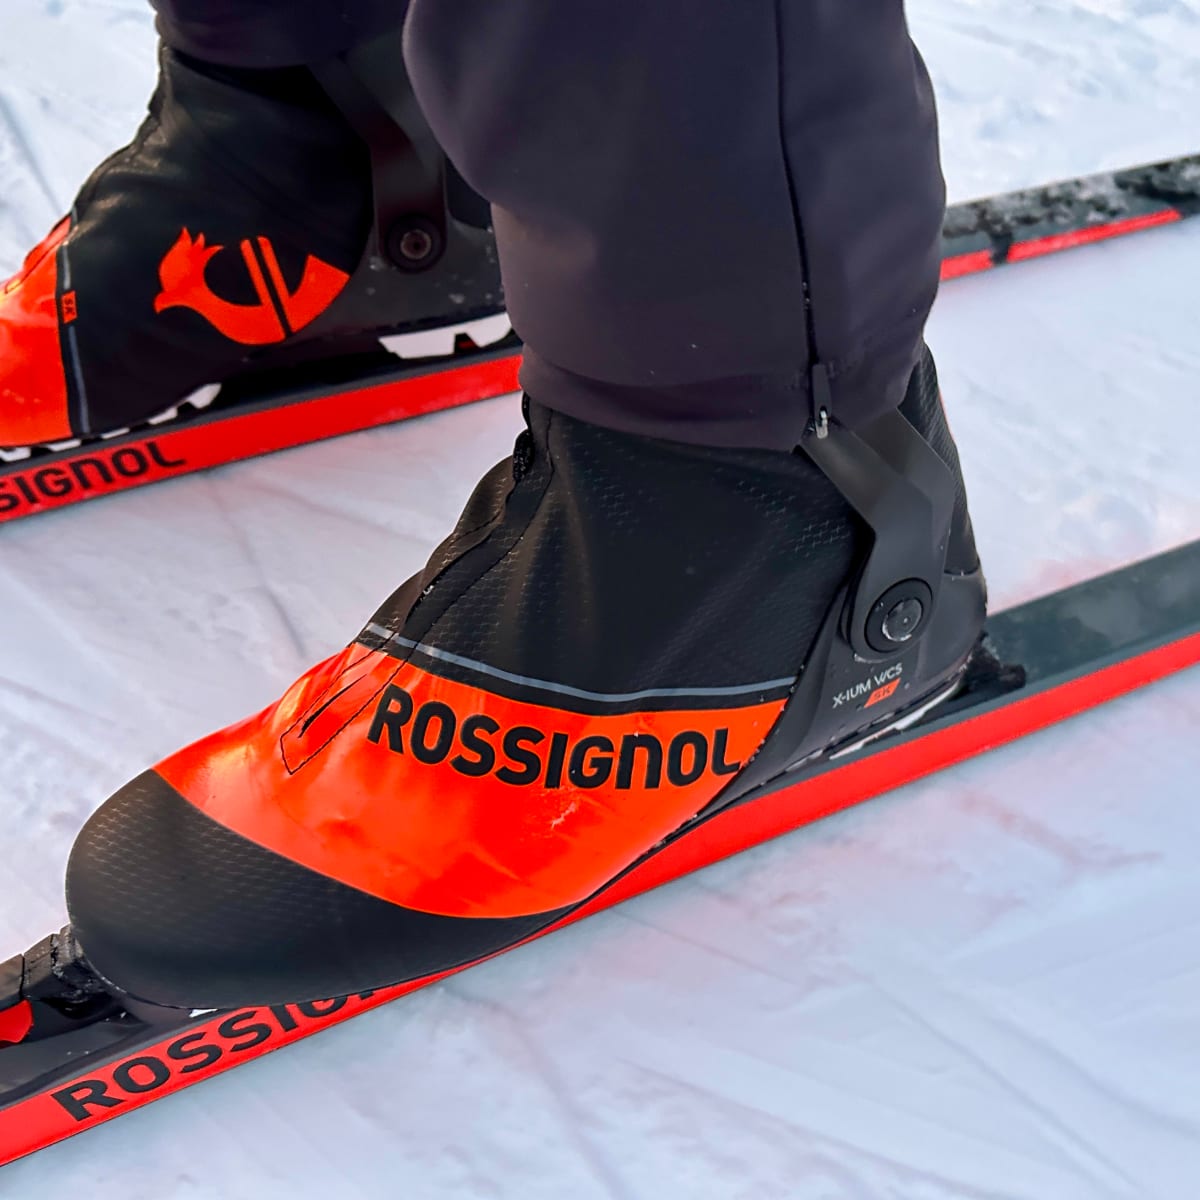 This Rossignol Skate Ski Setup Absolutely Rips - Men's Journal